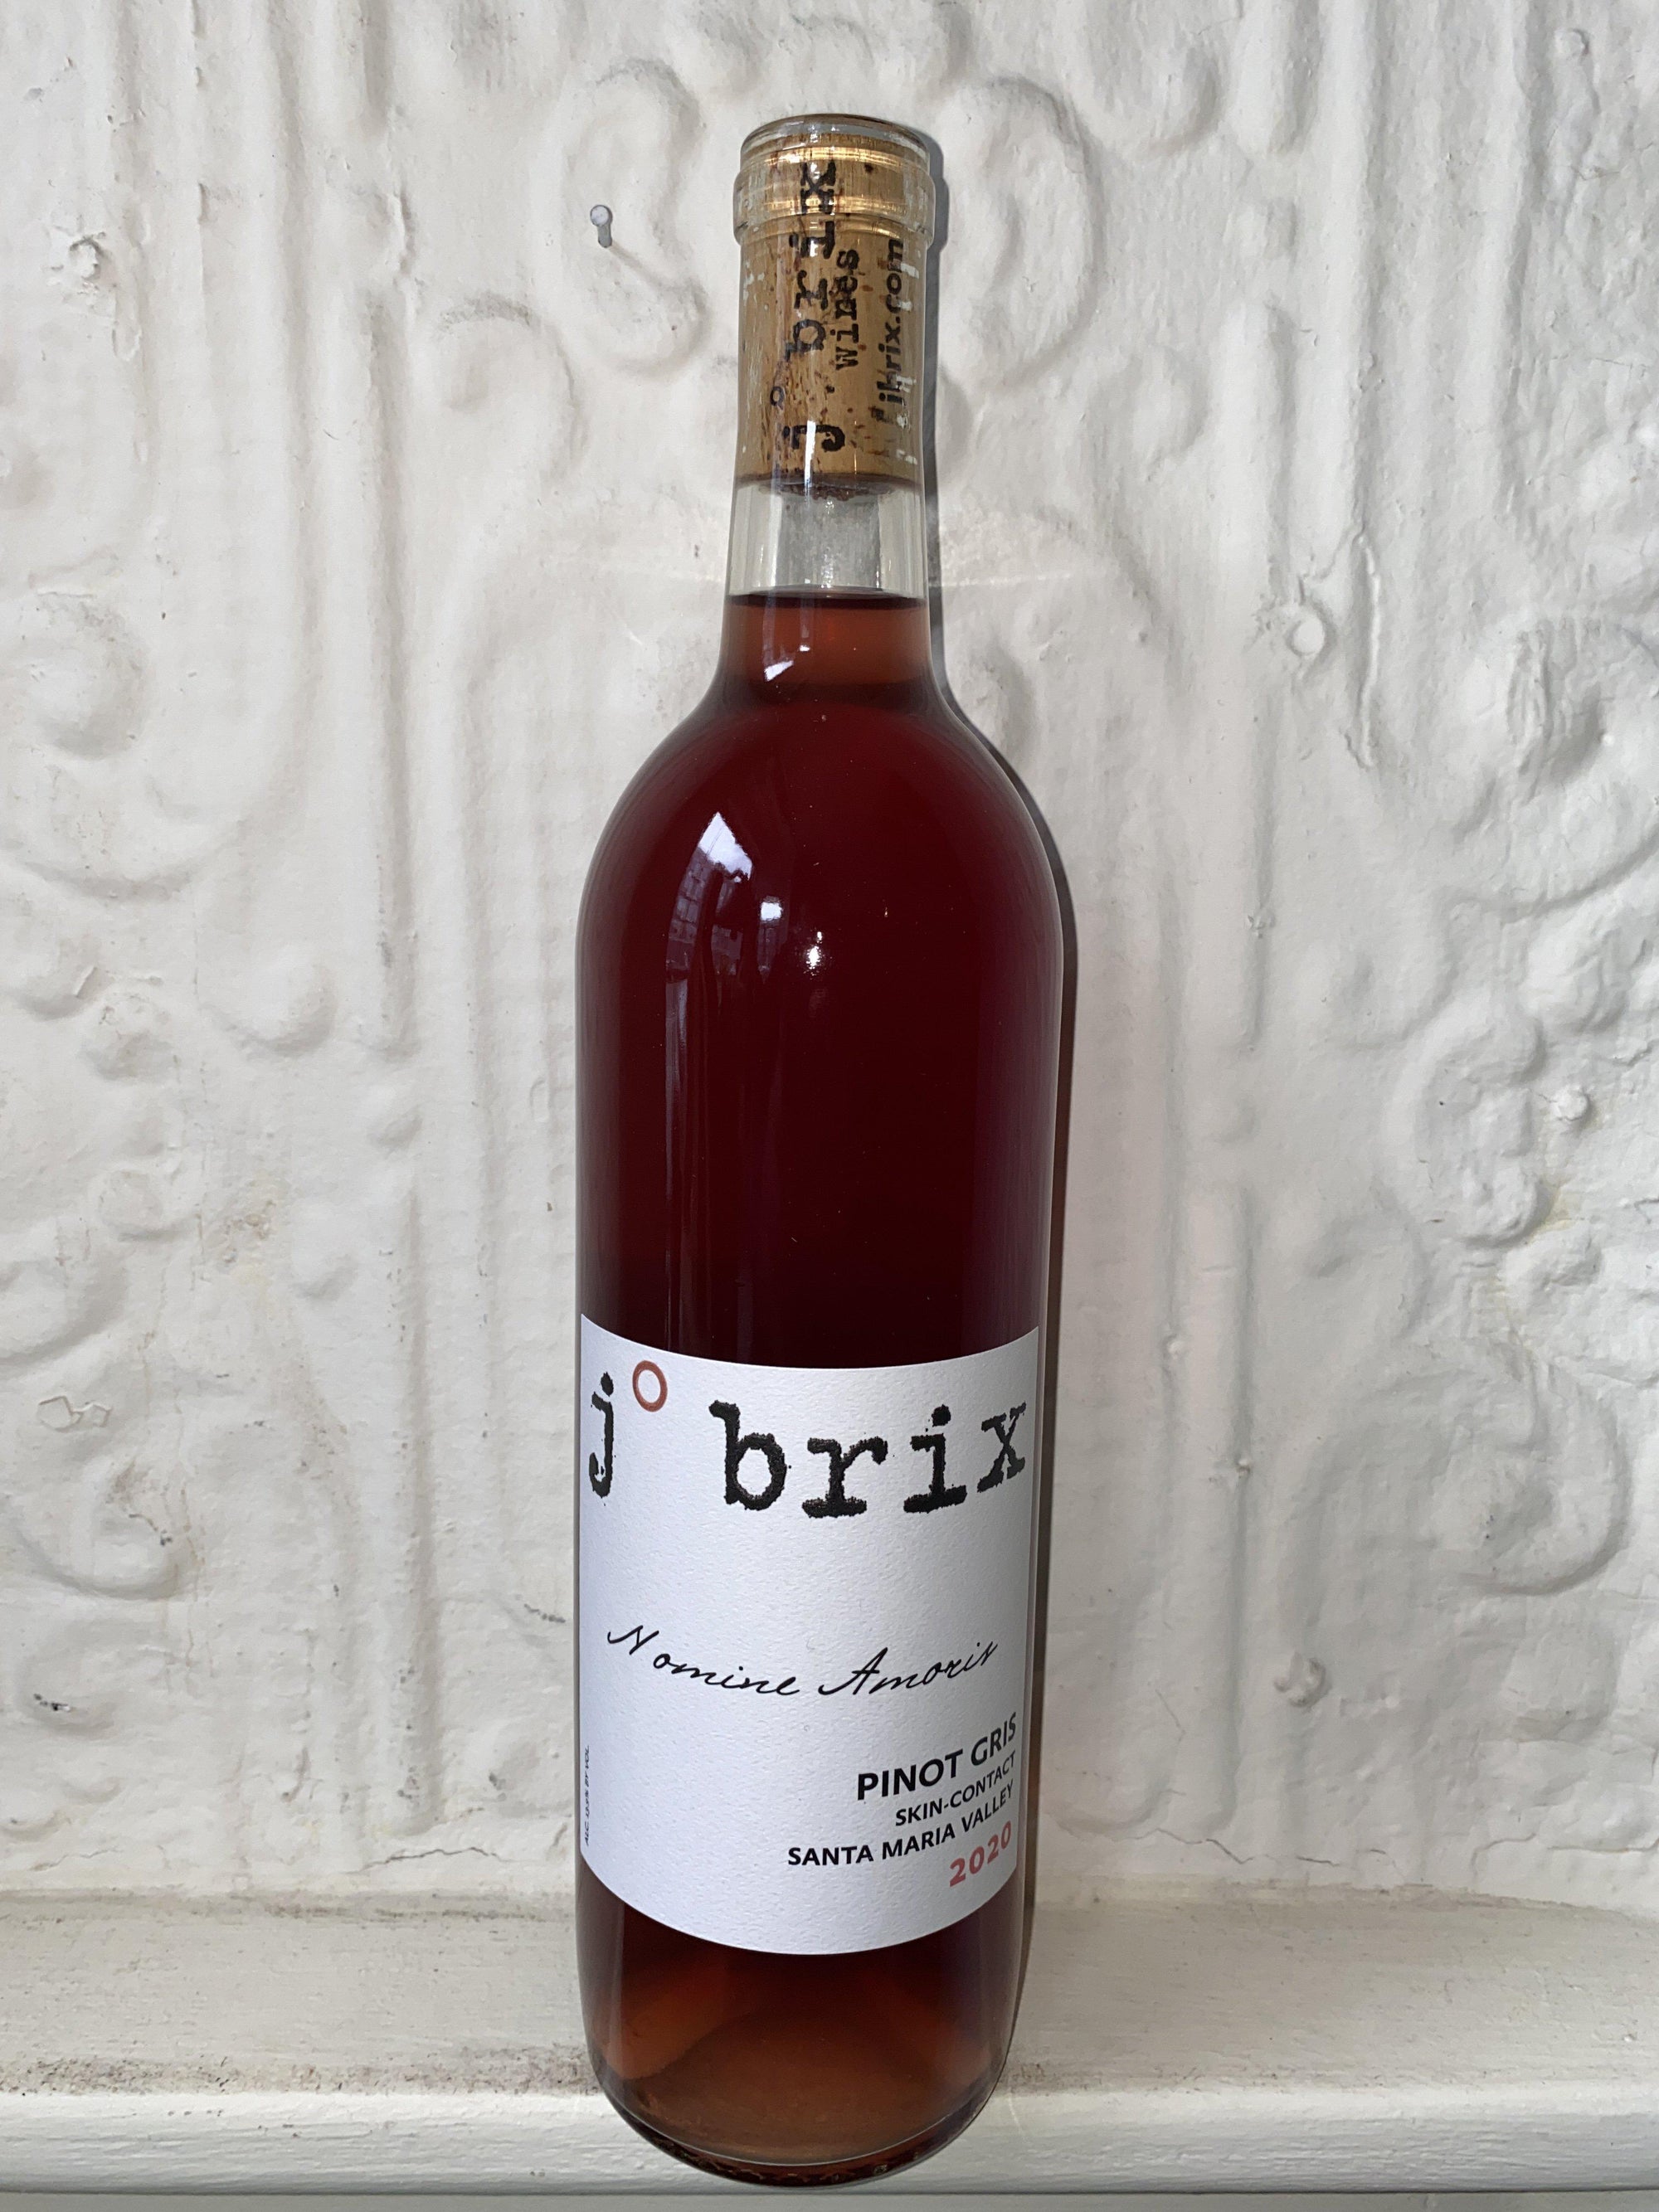 Pinot Gris Skin Contact "Nomine Amoris", J. Brix 2020 (California, United States)-Wine-Bibber & Bell